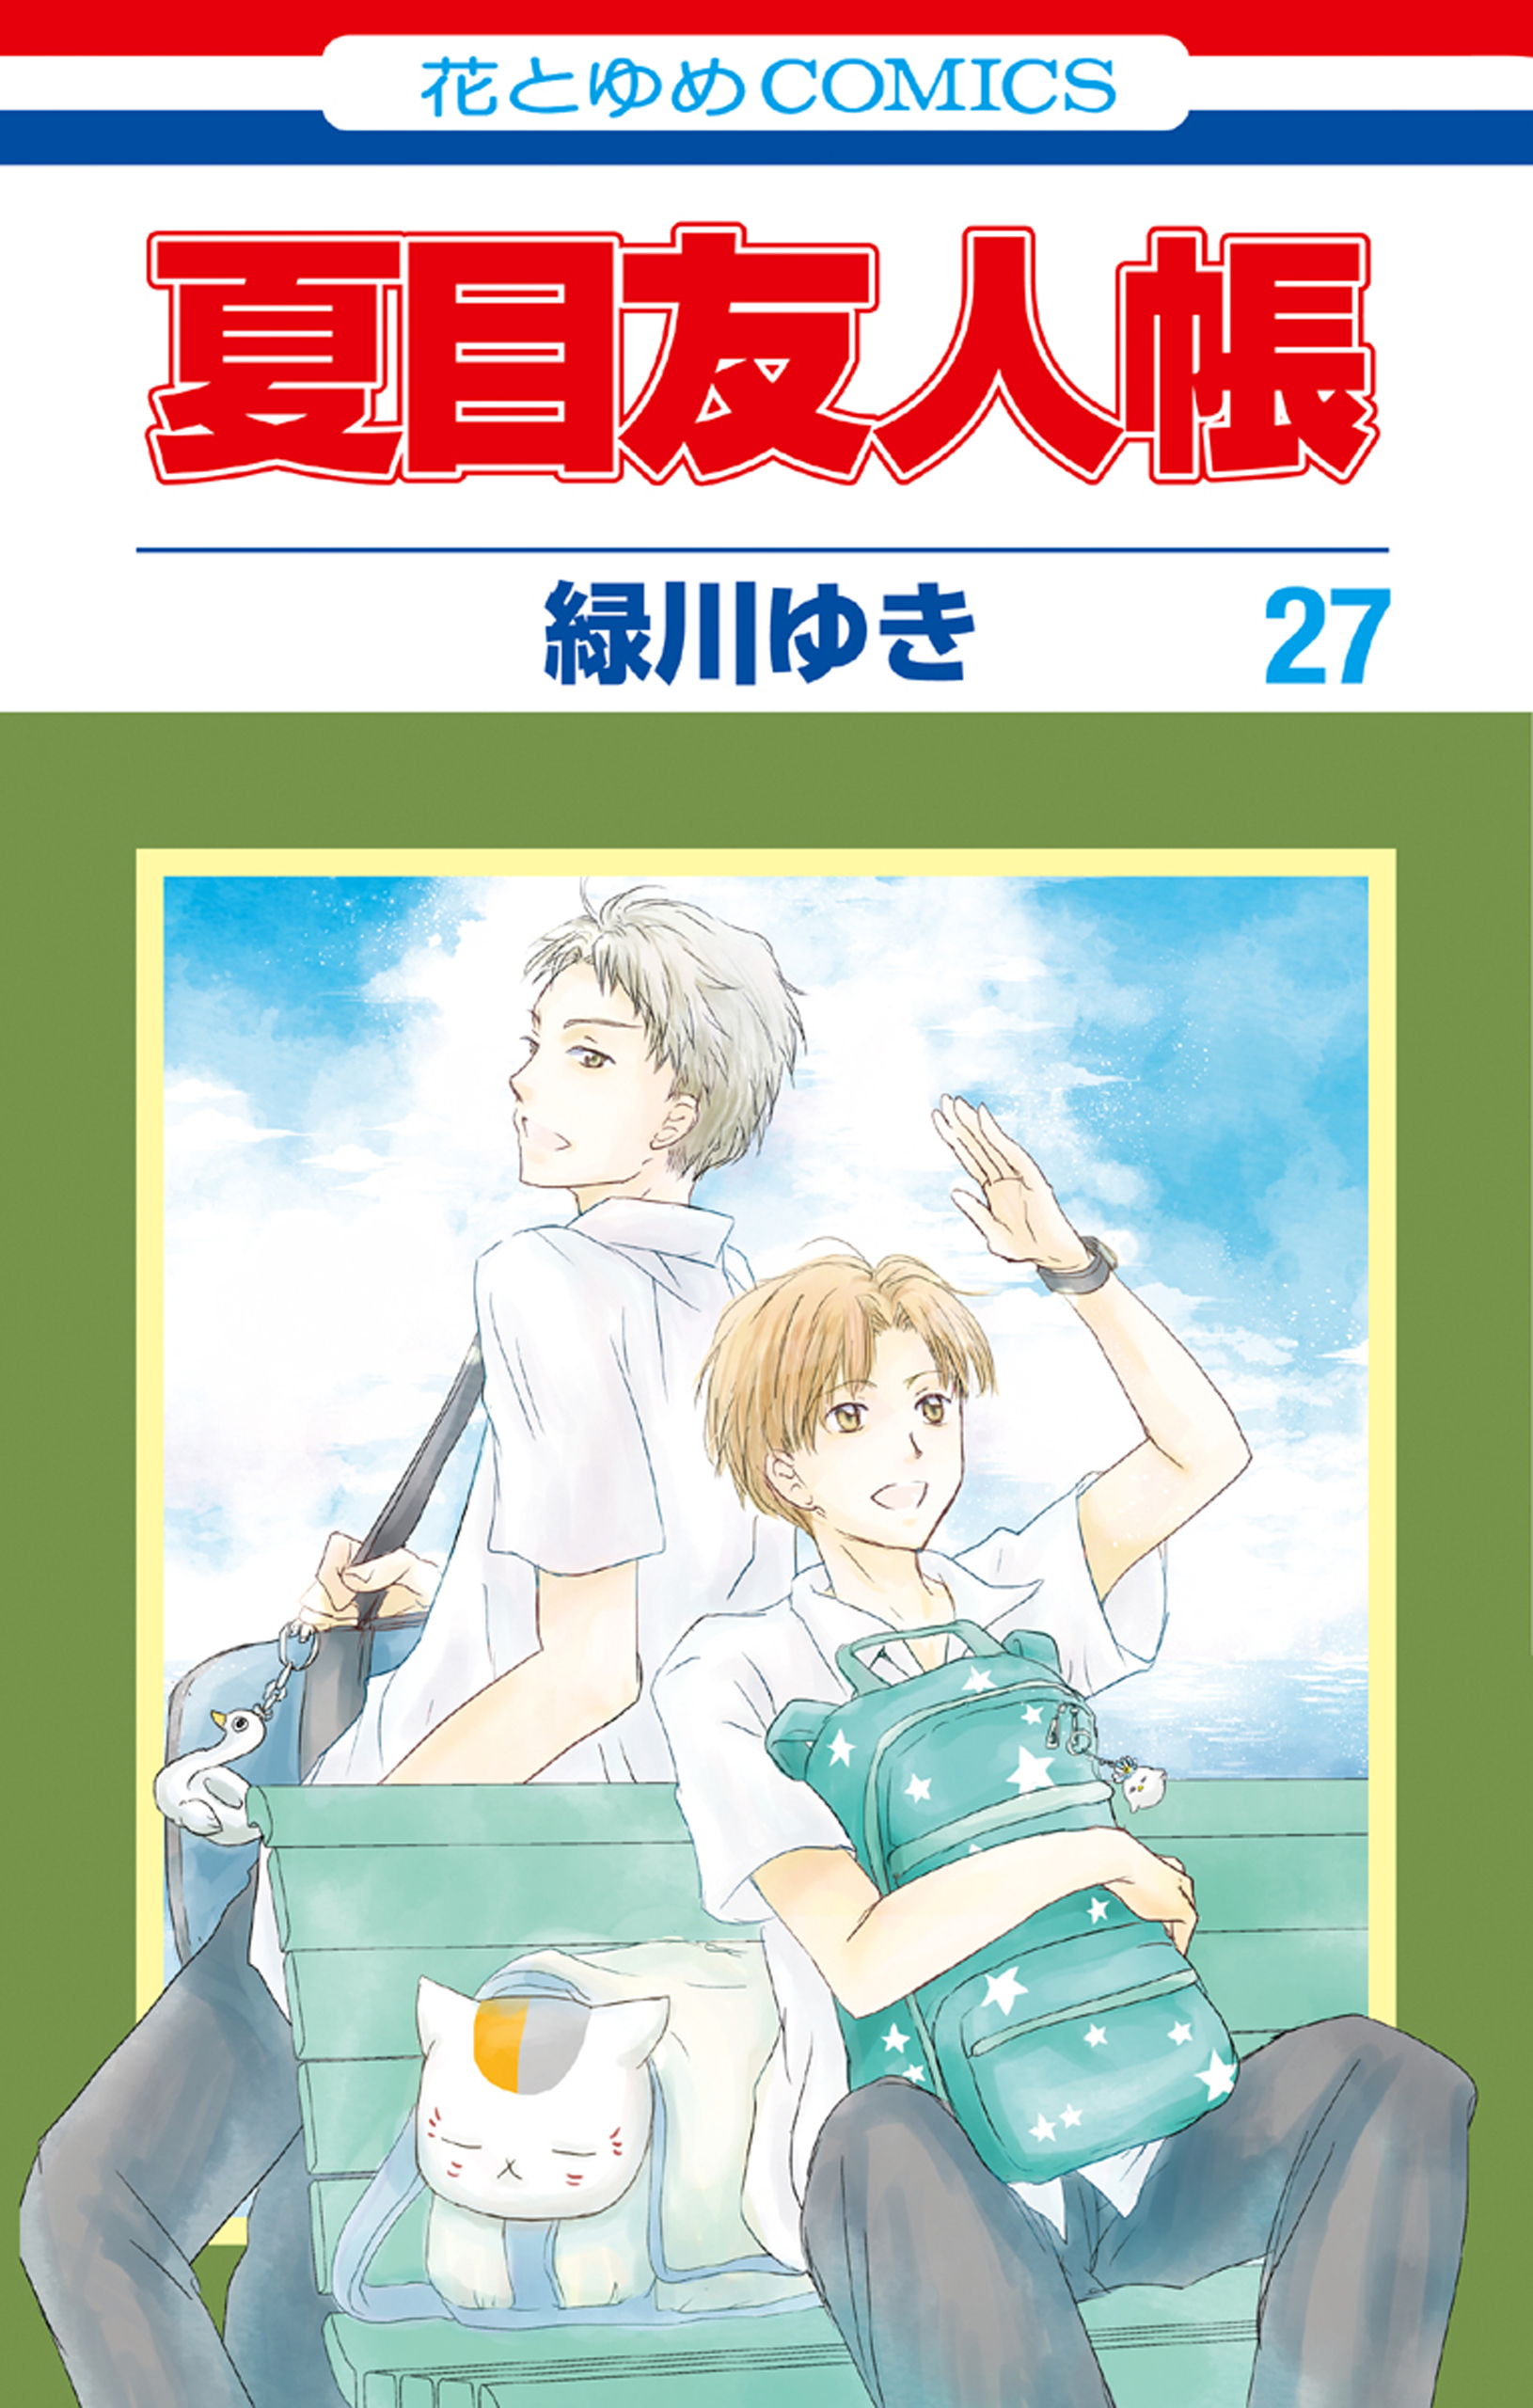 夏目友人帳 1〜30巻+蛍火の杜へ - 少女漫画